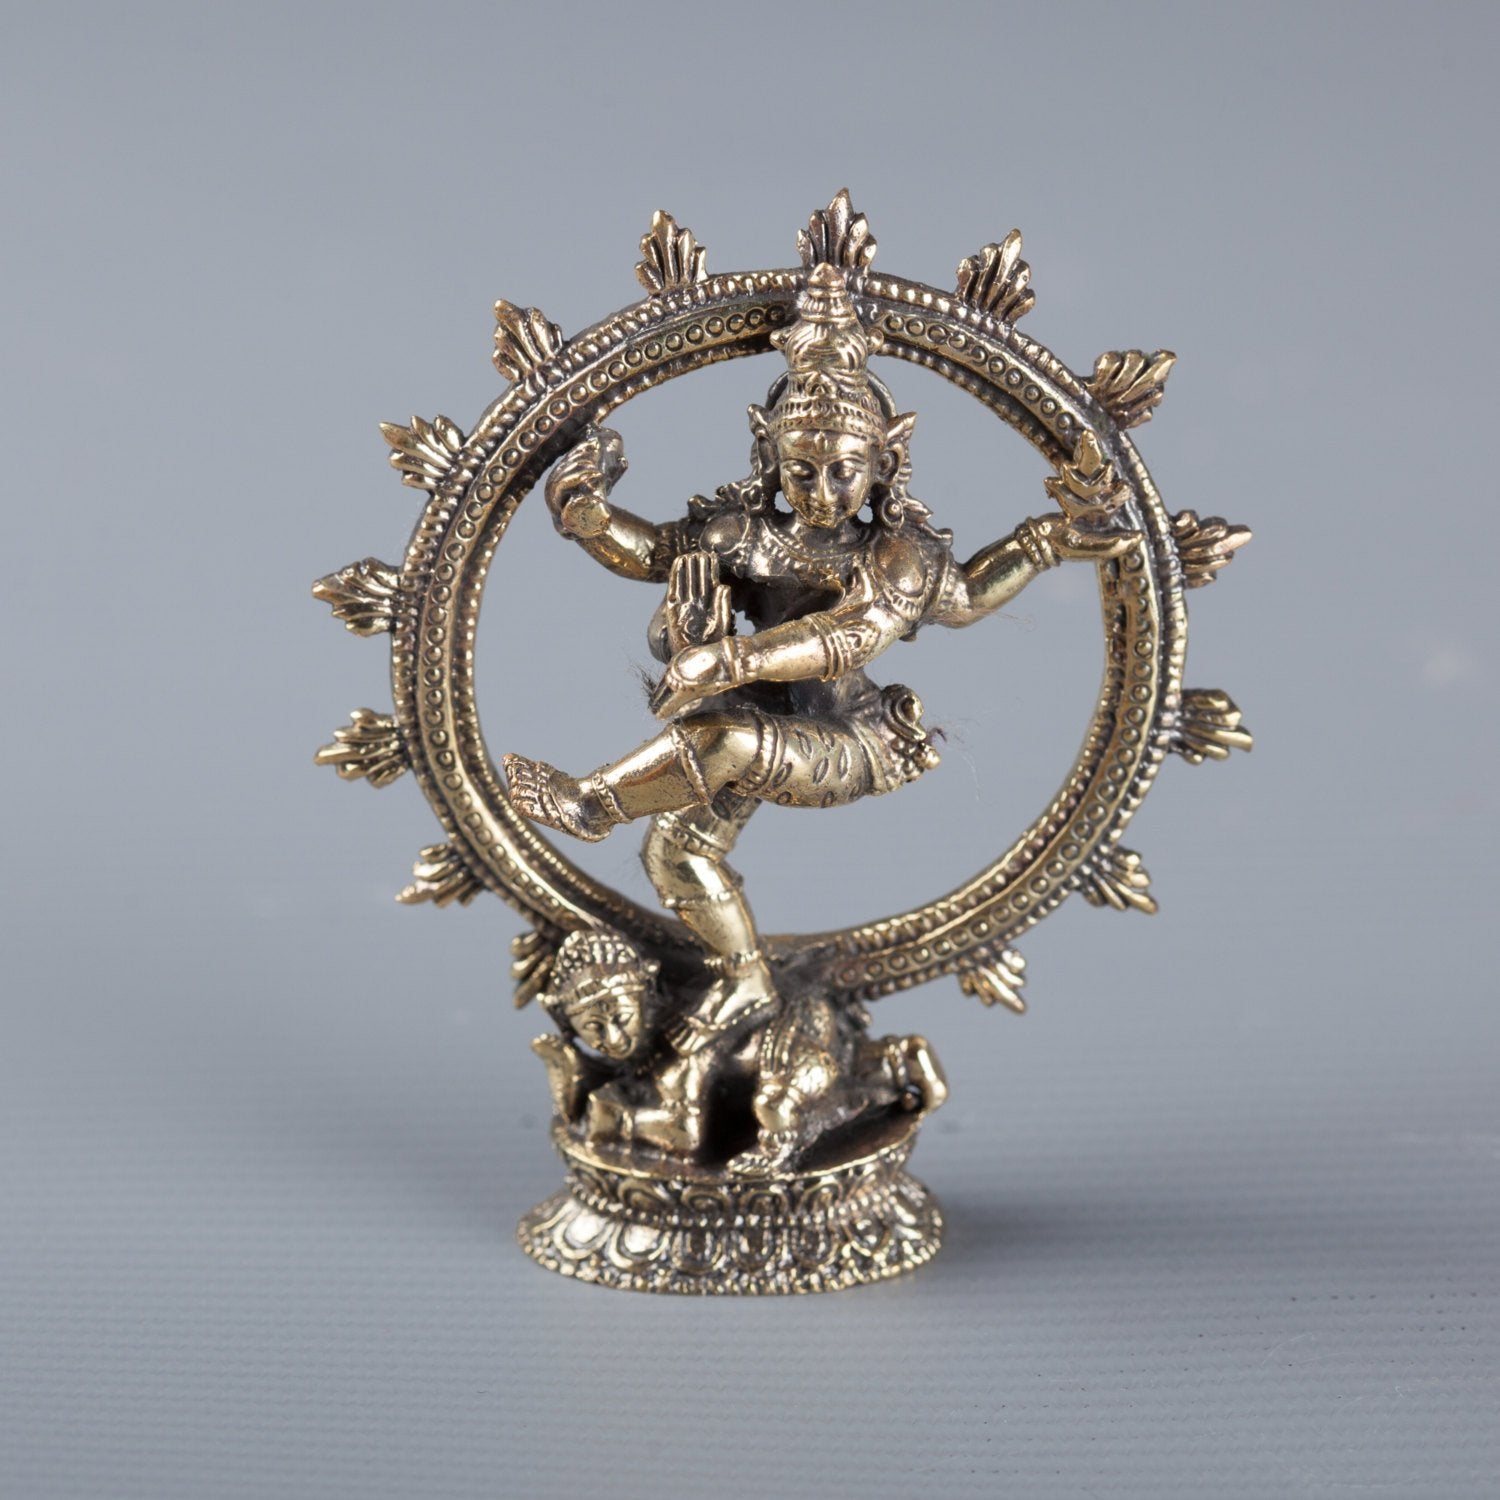 Small Minature Shiva Statue - Thailand Brass Dancing Shiva statue